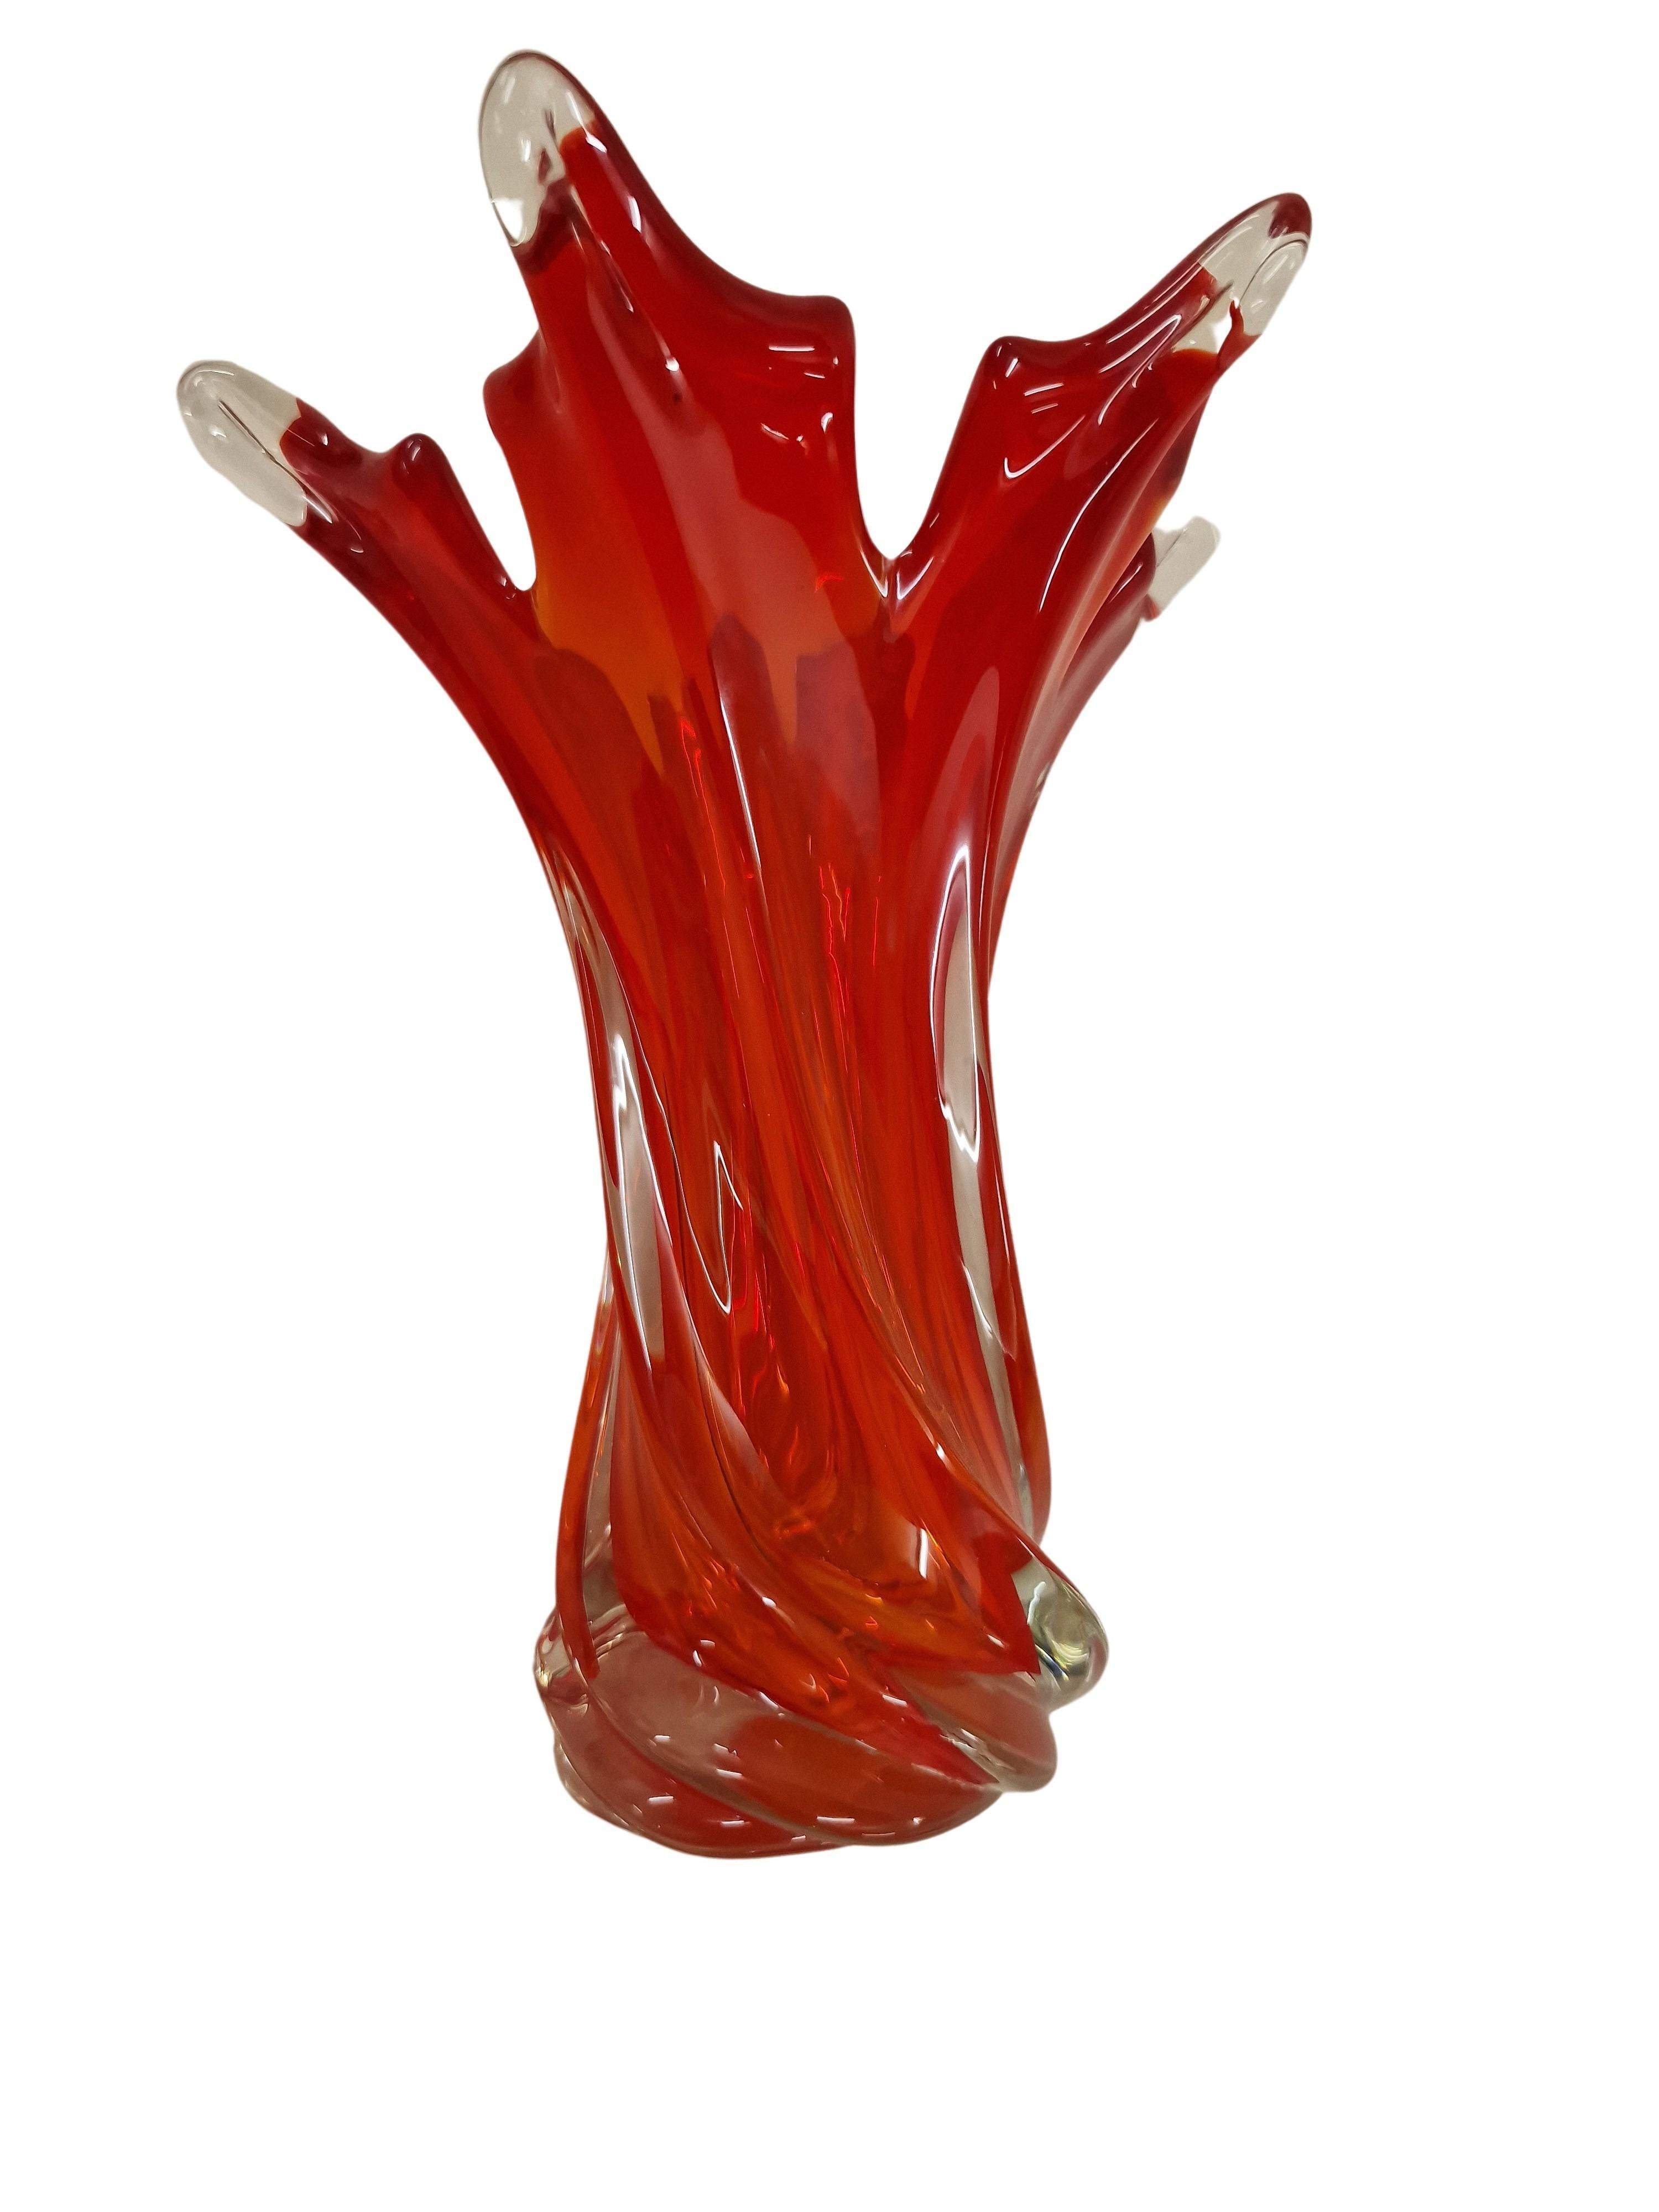 Italian Decorative flower vase, Murano art glass, blown glass, 1970s Murano Venice Italy For Sale